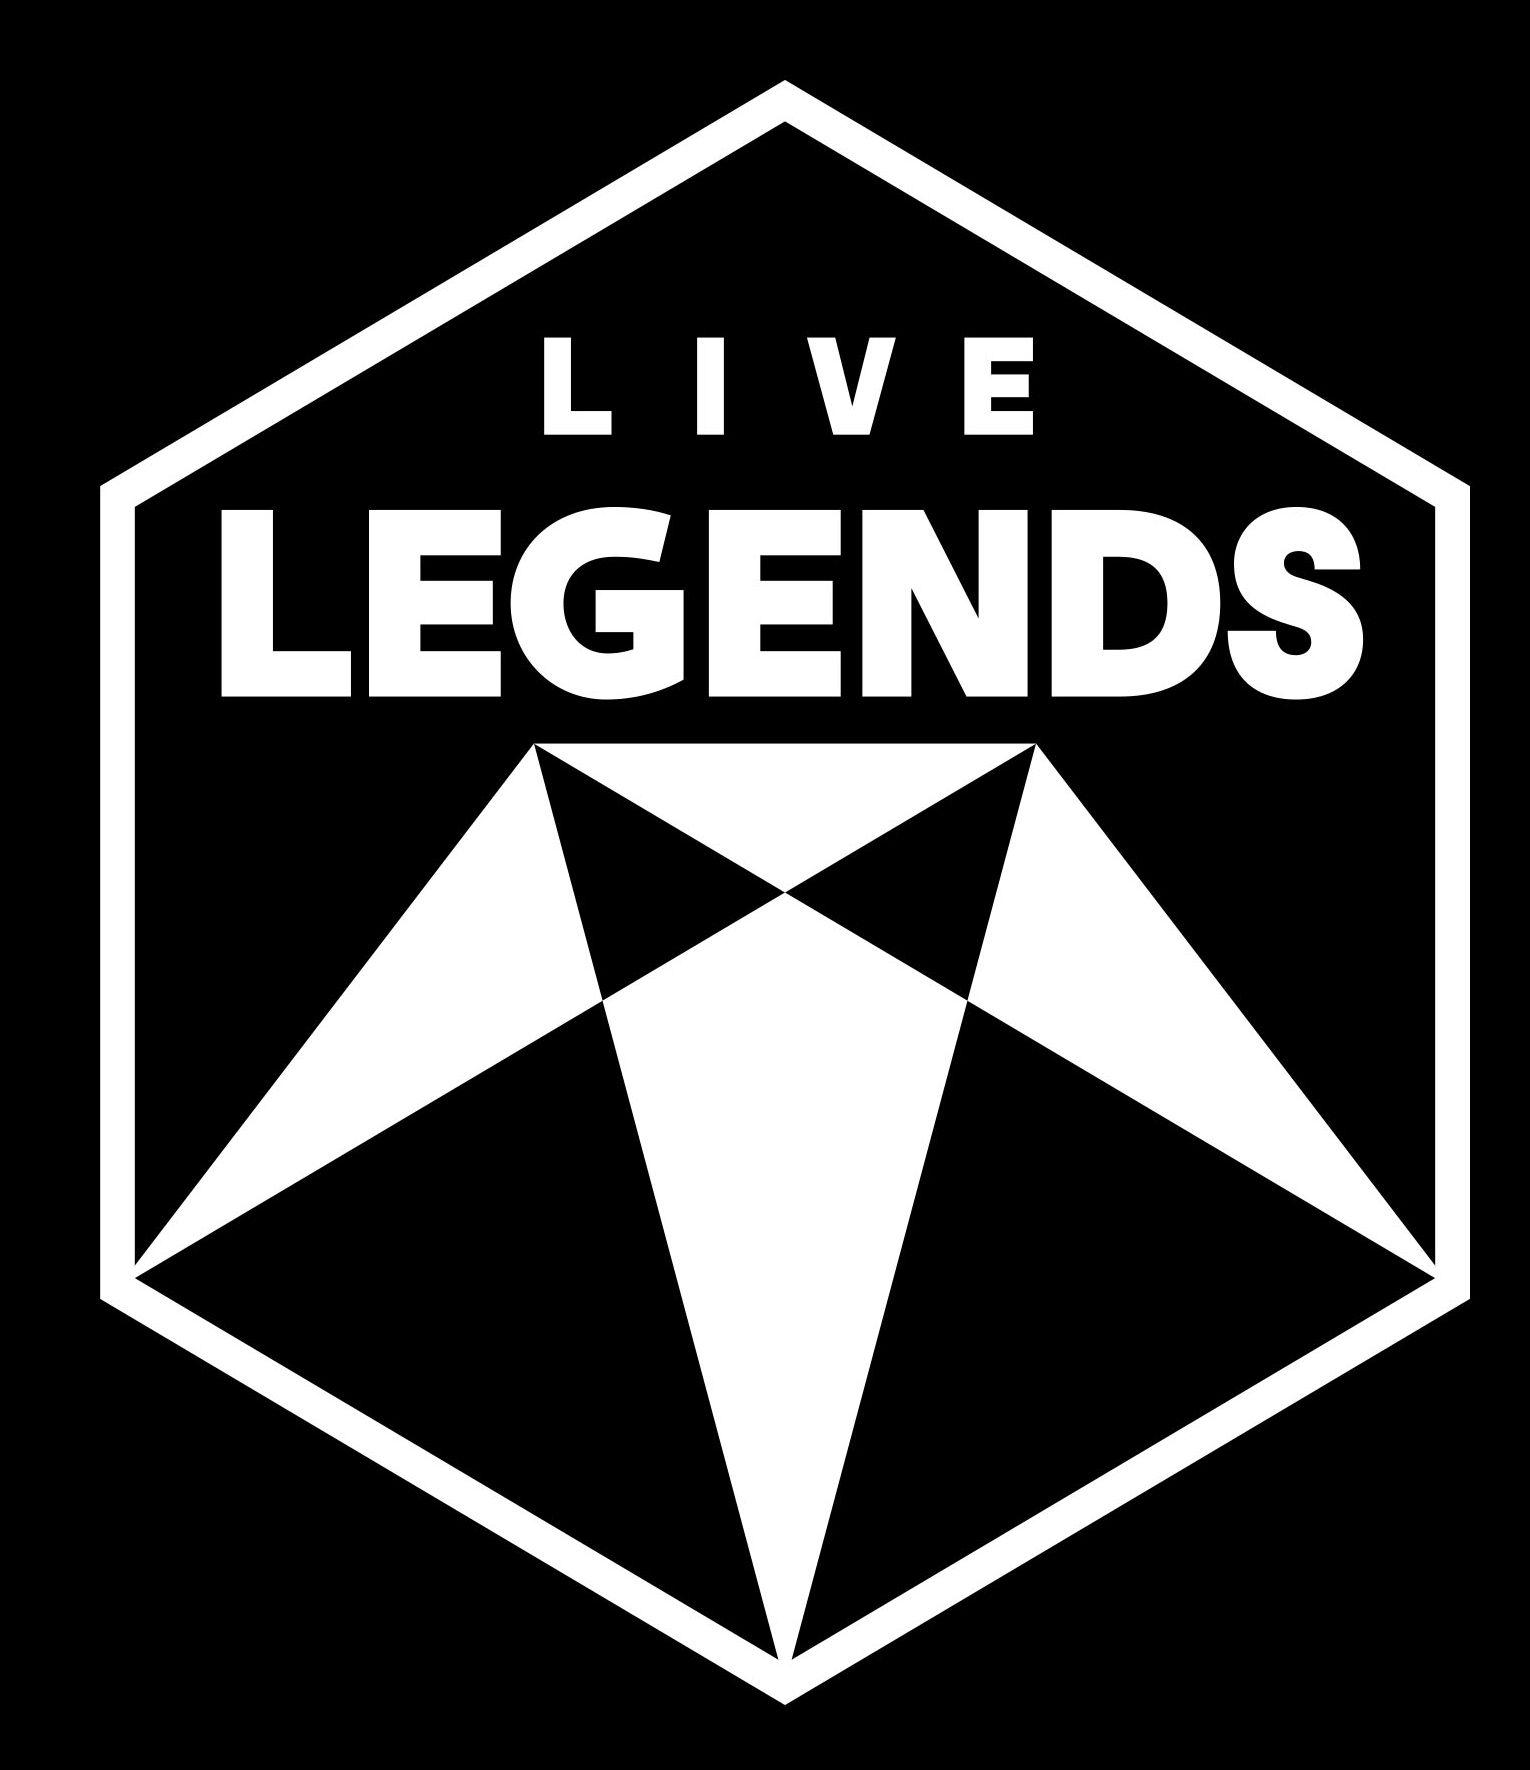 Live Legends